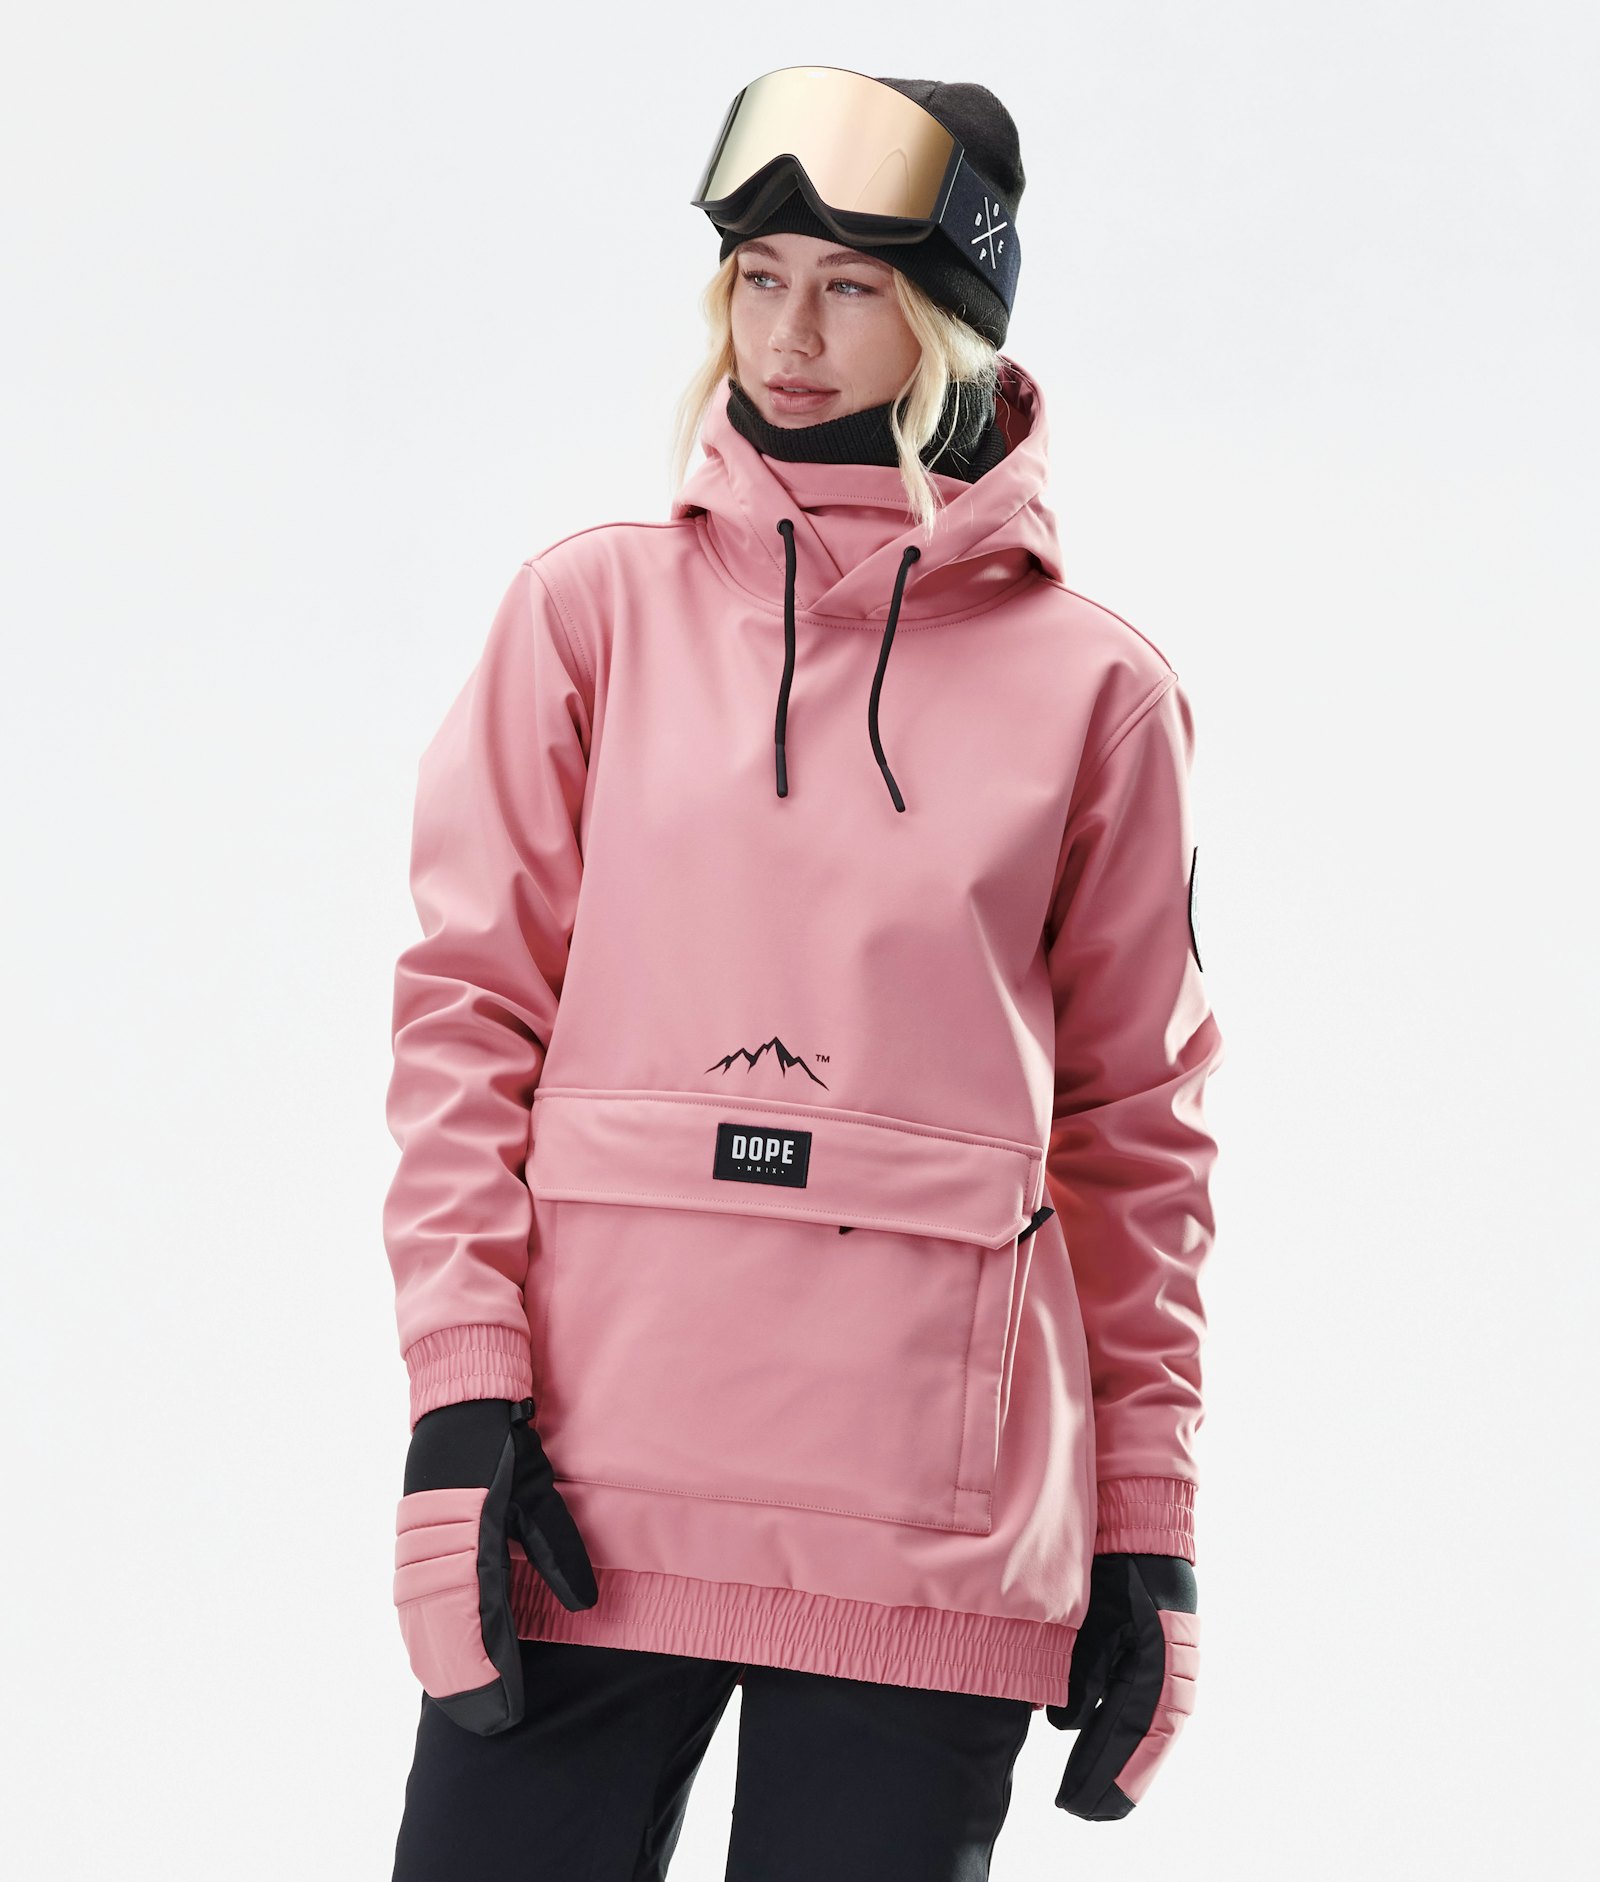 Wylie W 10k Snowboard Jacket Women Patch Pink